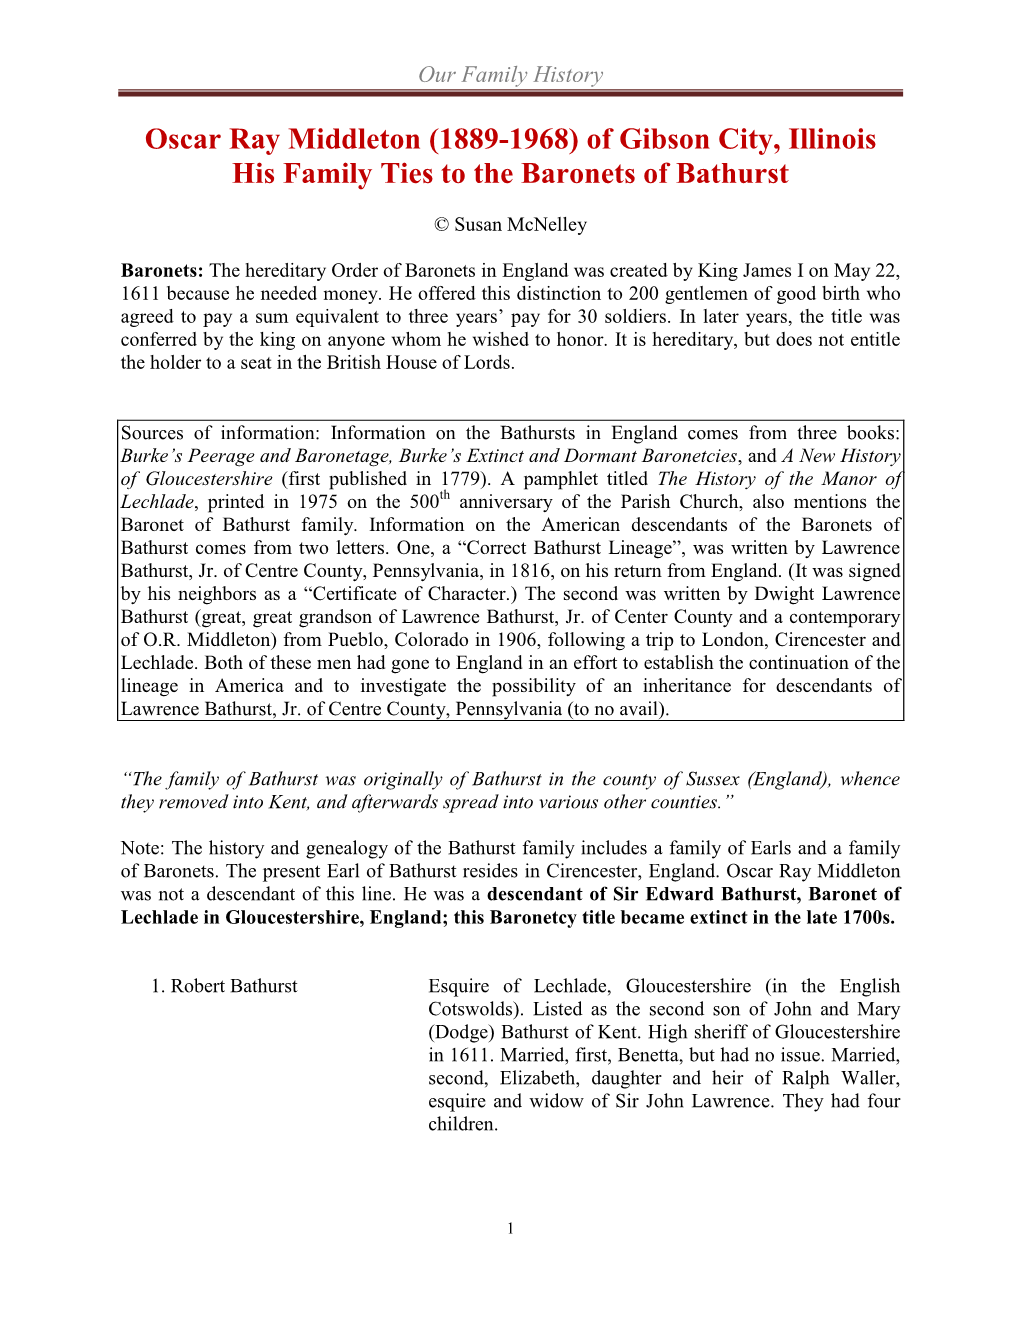 Family Ties to the Baronets of Bathurst